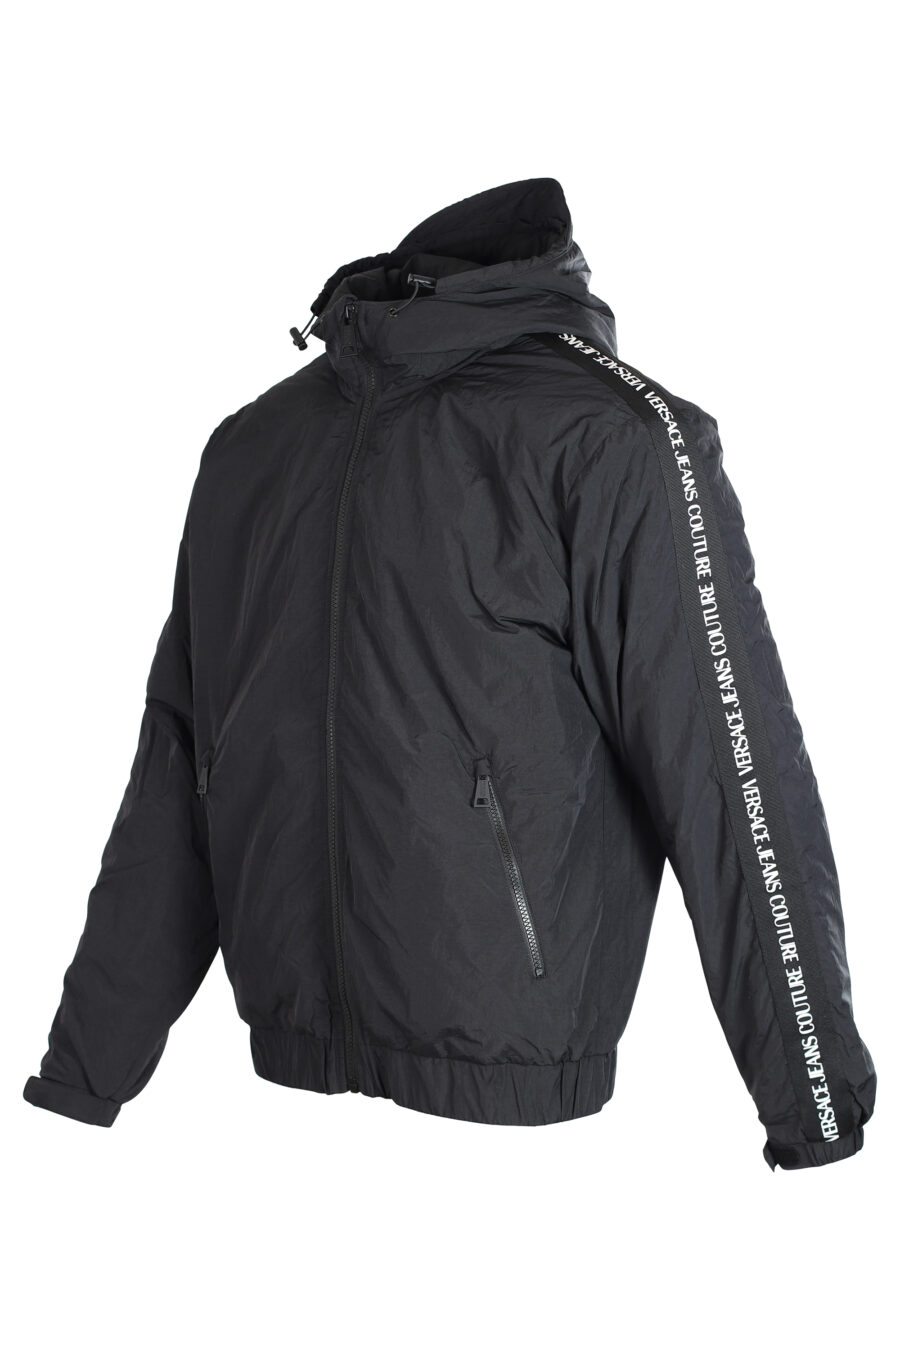 Black hooded jacket with logo on sleeve tape - 8058987960710 2